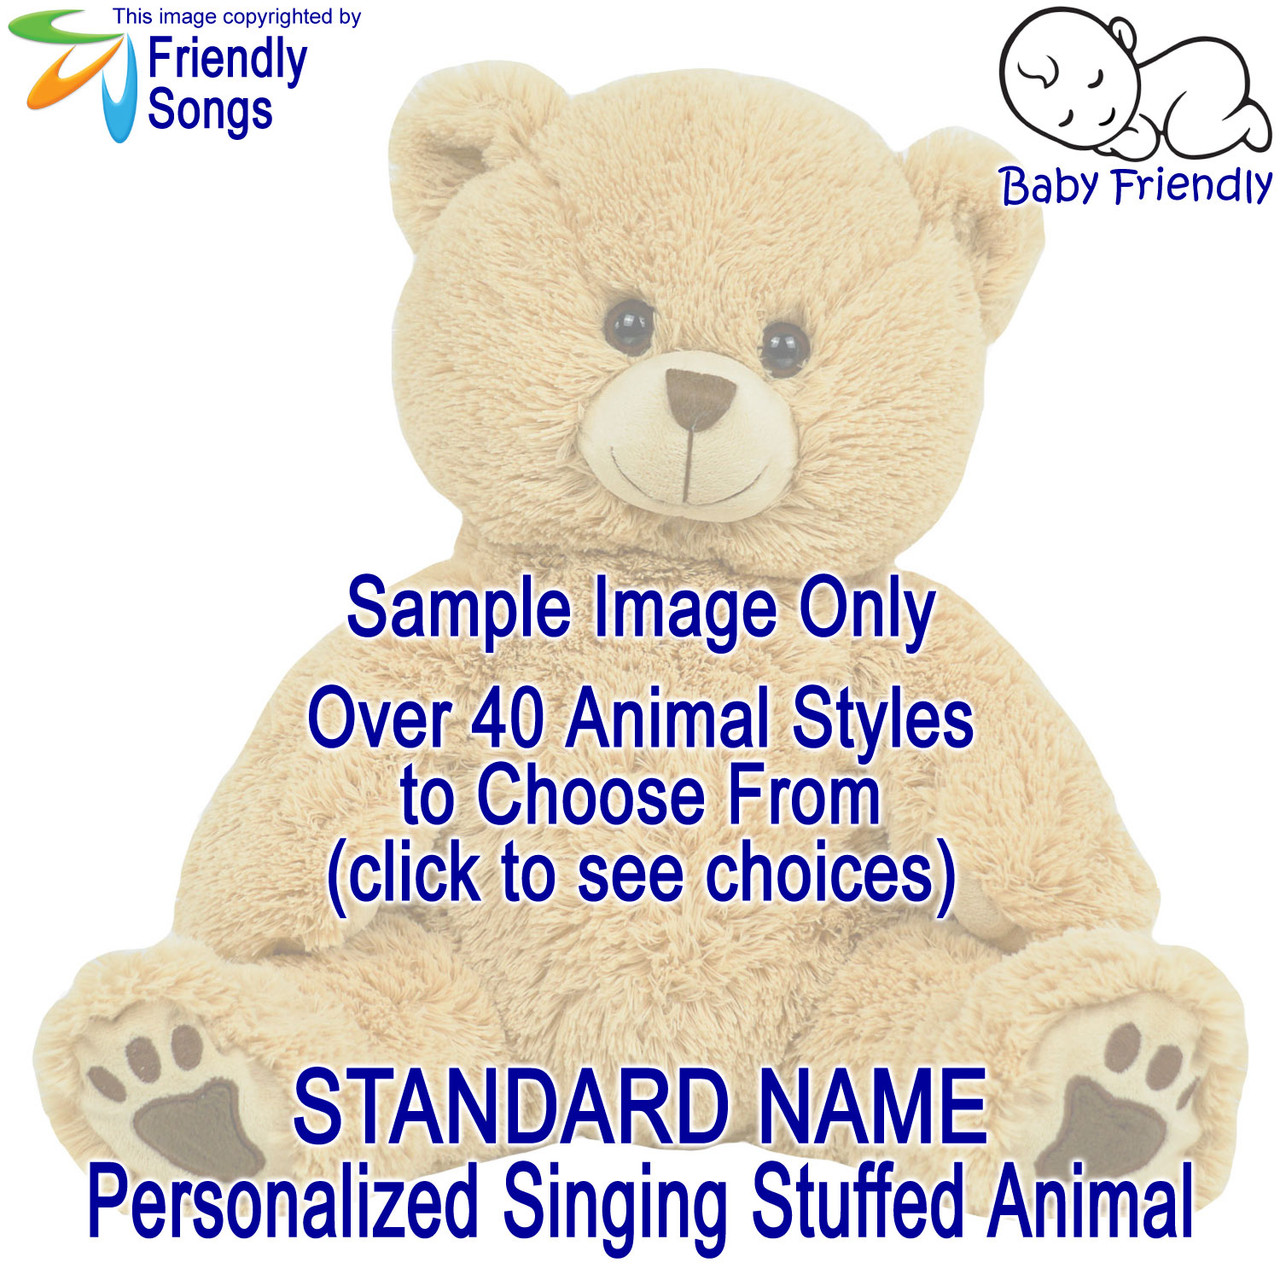 STANDARD NAME - Personalized Singing Stuffed Animal Plush Toys - Kid Music  Personalized Music & Gifts